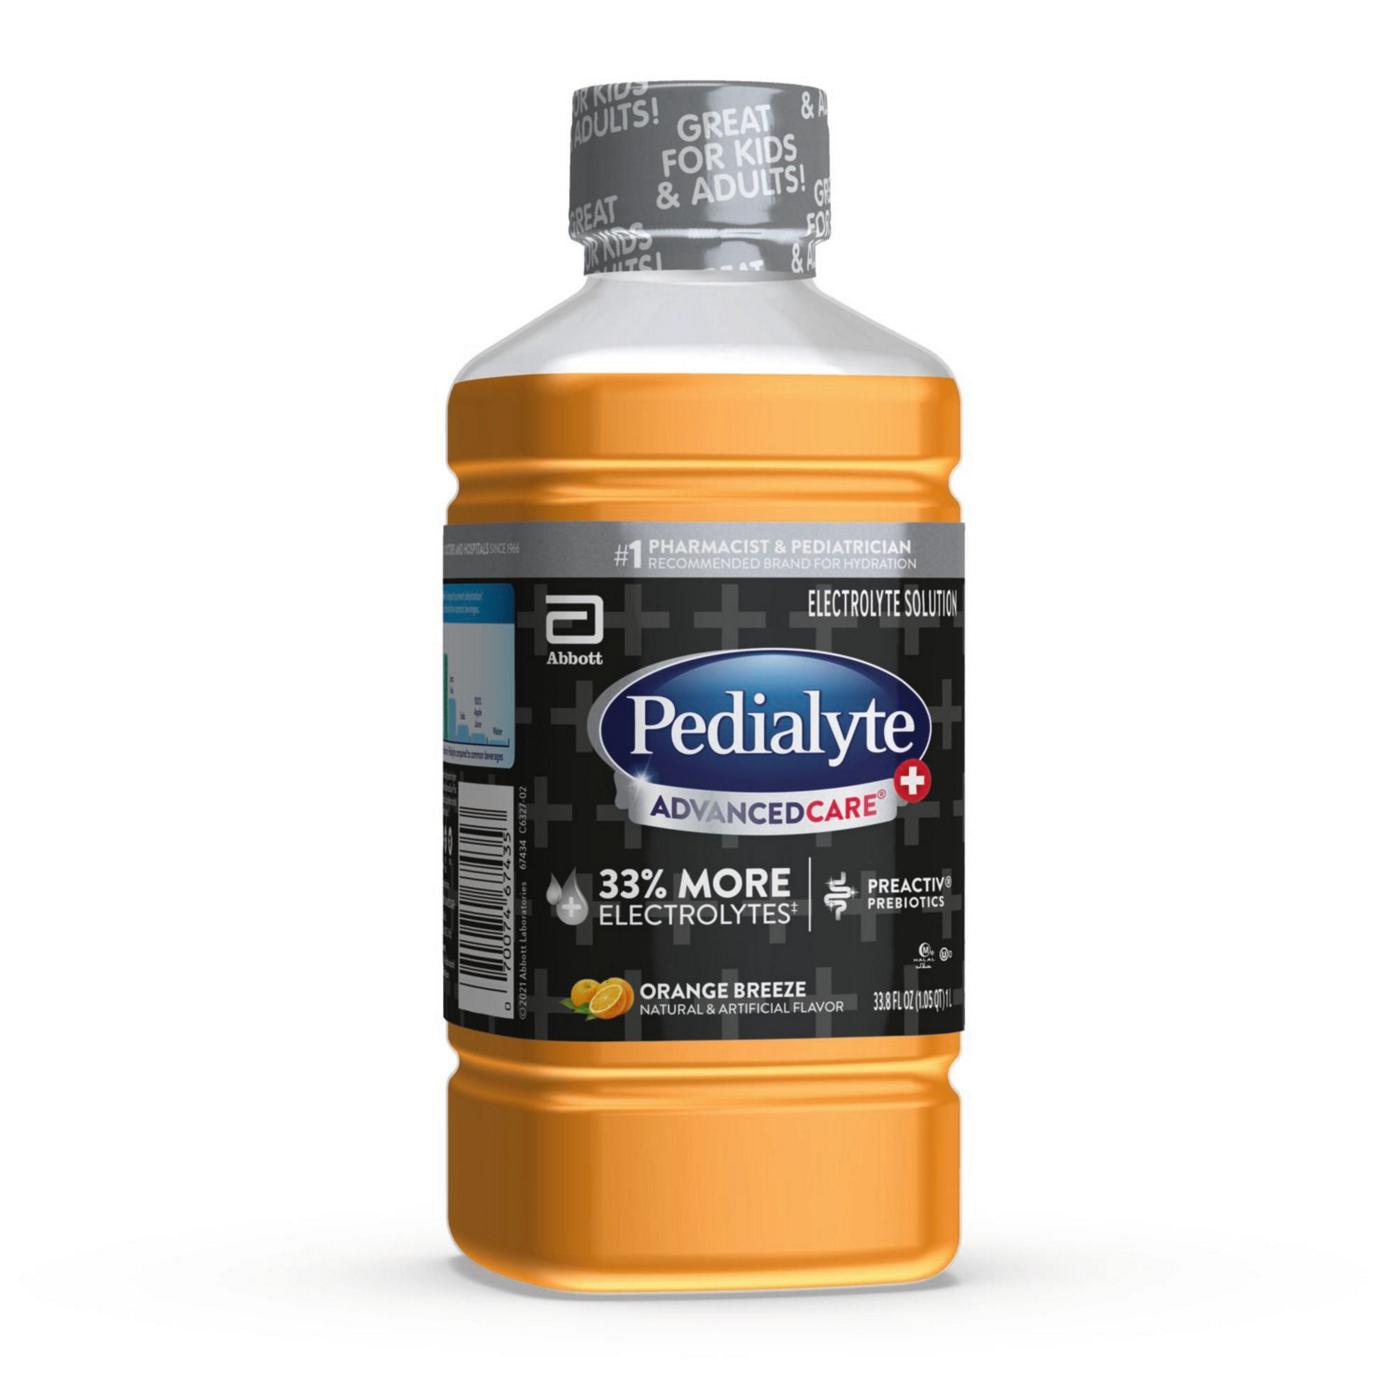 Pedialyte AdvancedCare Plus Plus Orange; image 2 of 9